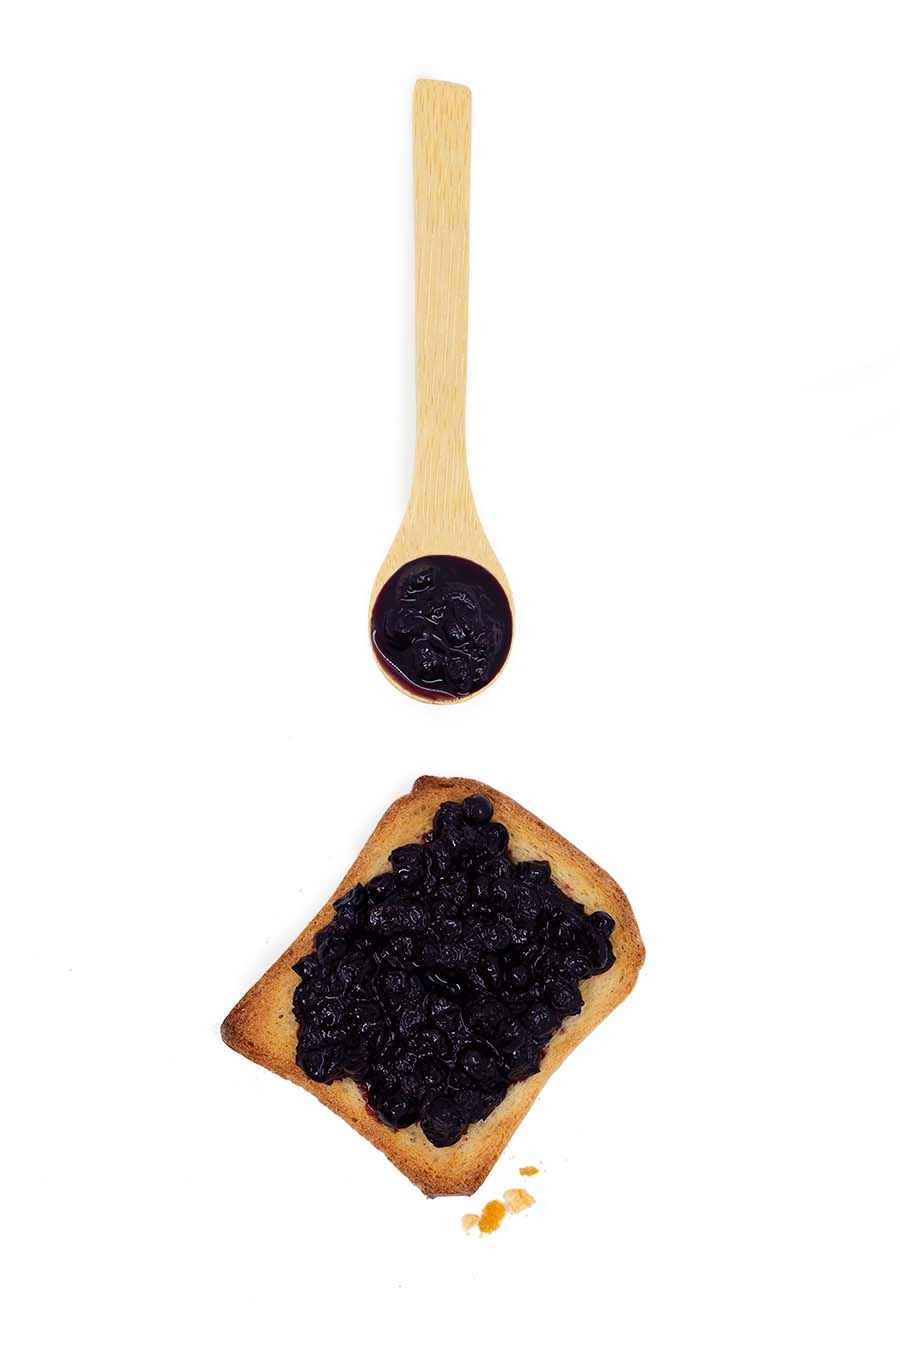 Artisanal No Sugar Added Wild Bilberry Jam spoon toast Health from Europe